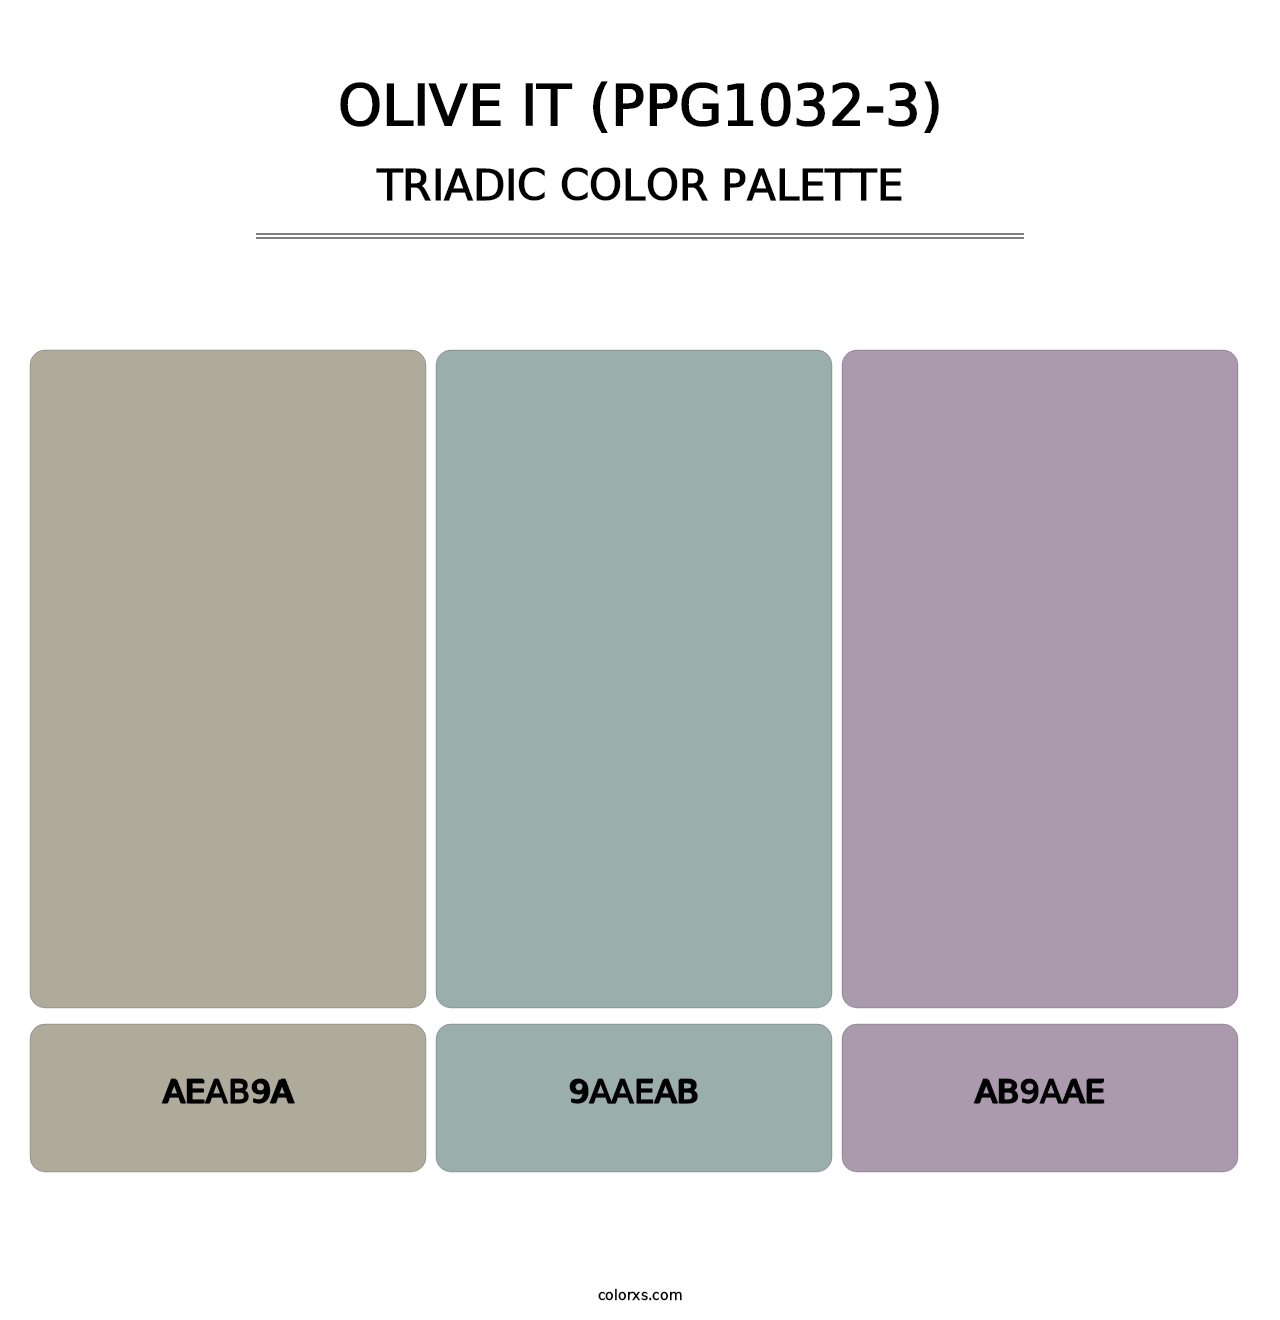 Olive It (PPG1032-3) - Triadic Color Palette